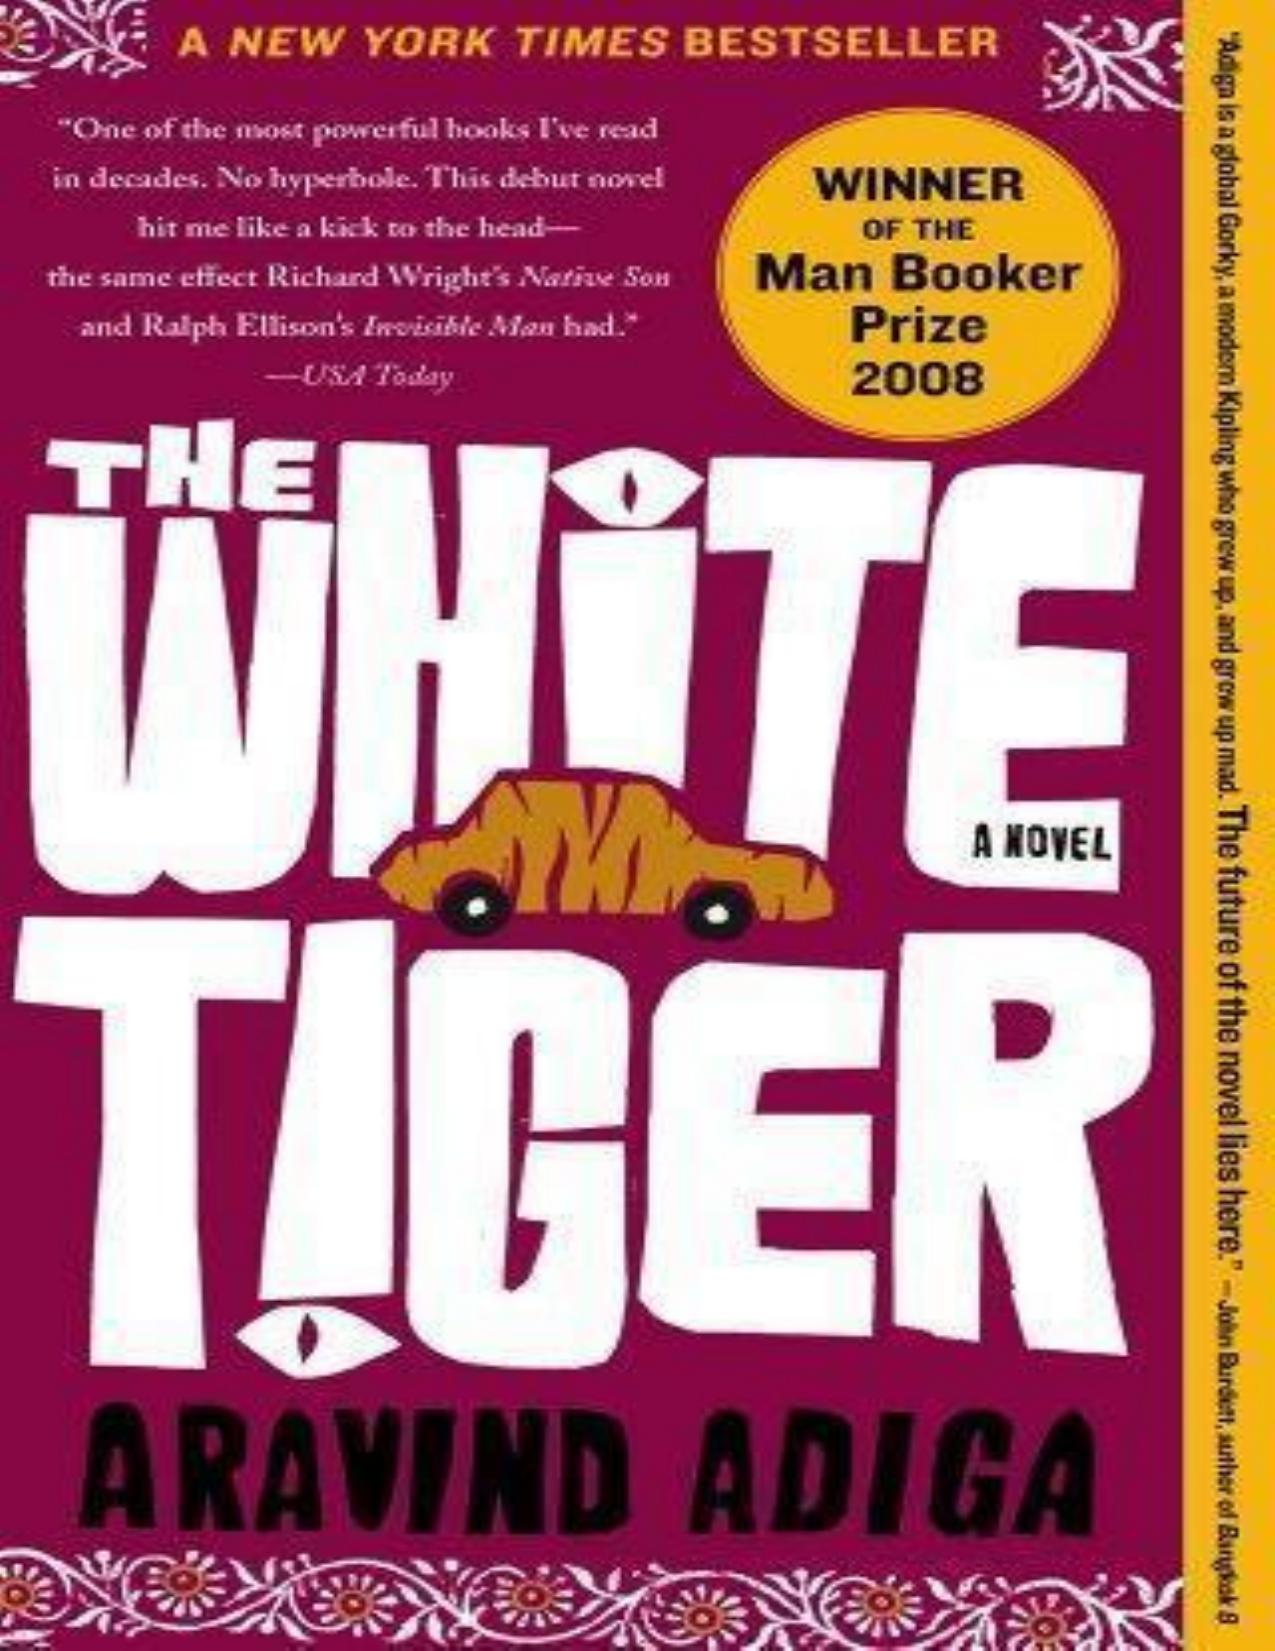 The White Tiger: A Novel by Adiga Aravind